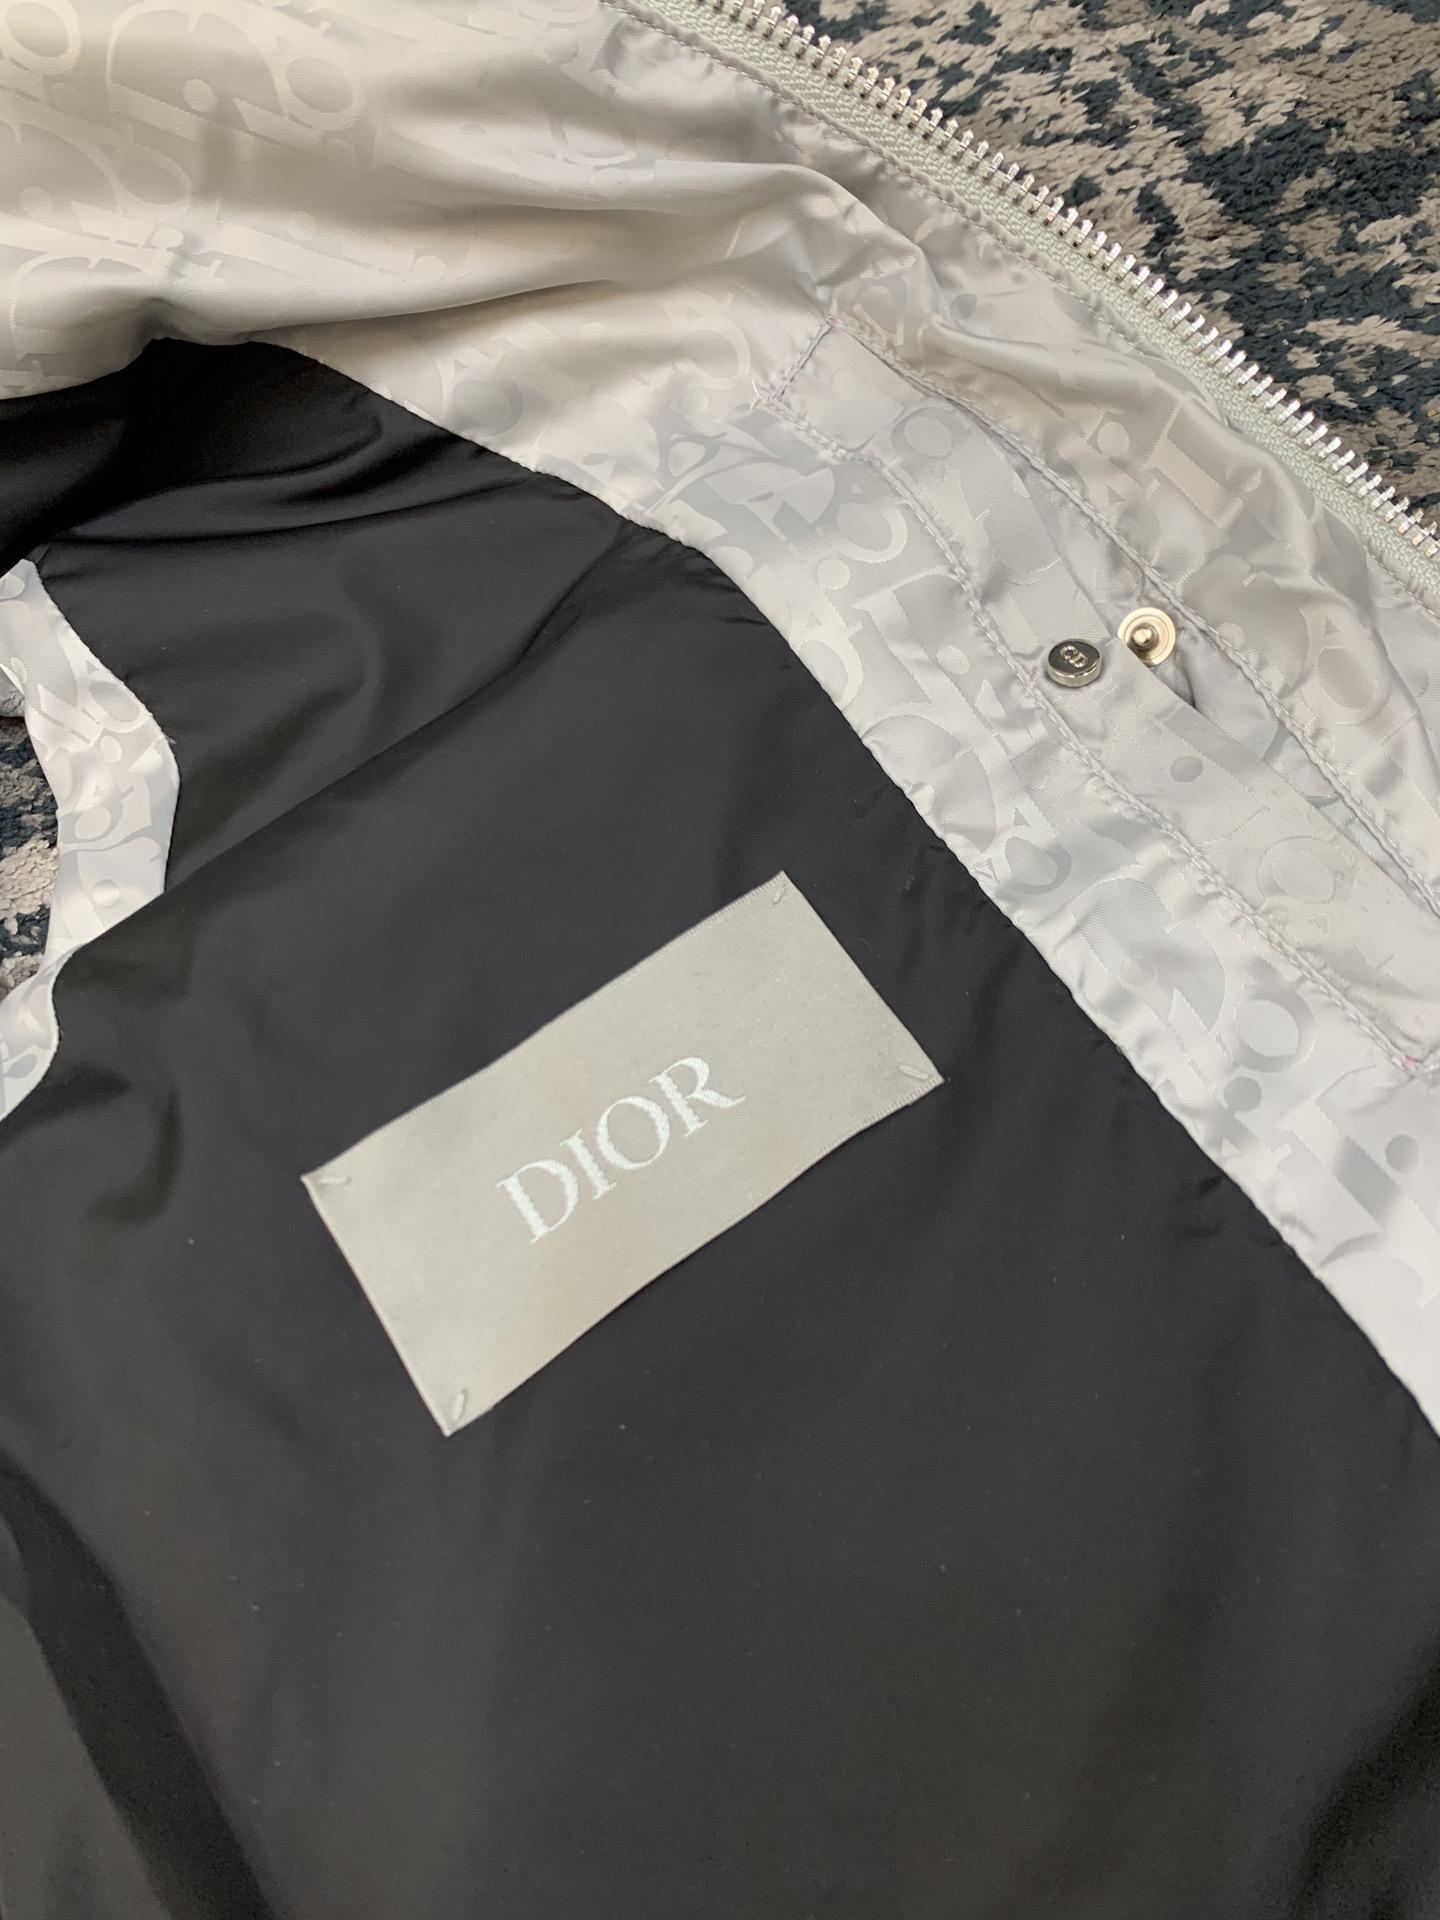 dior-oblique-sleeveless-down-jacket-5623_16844017128-1000